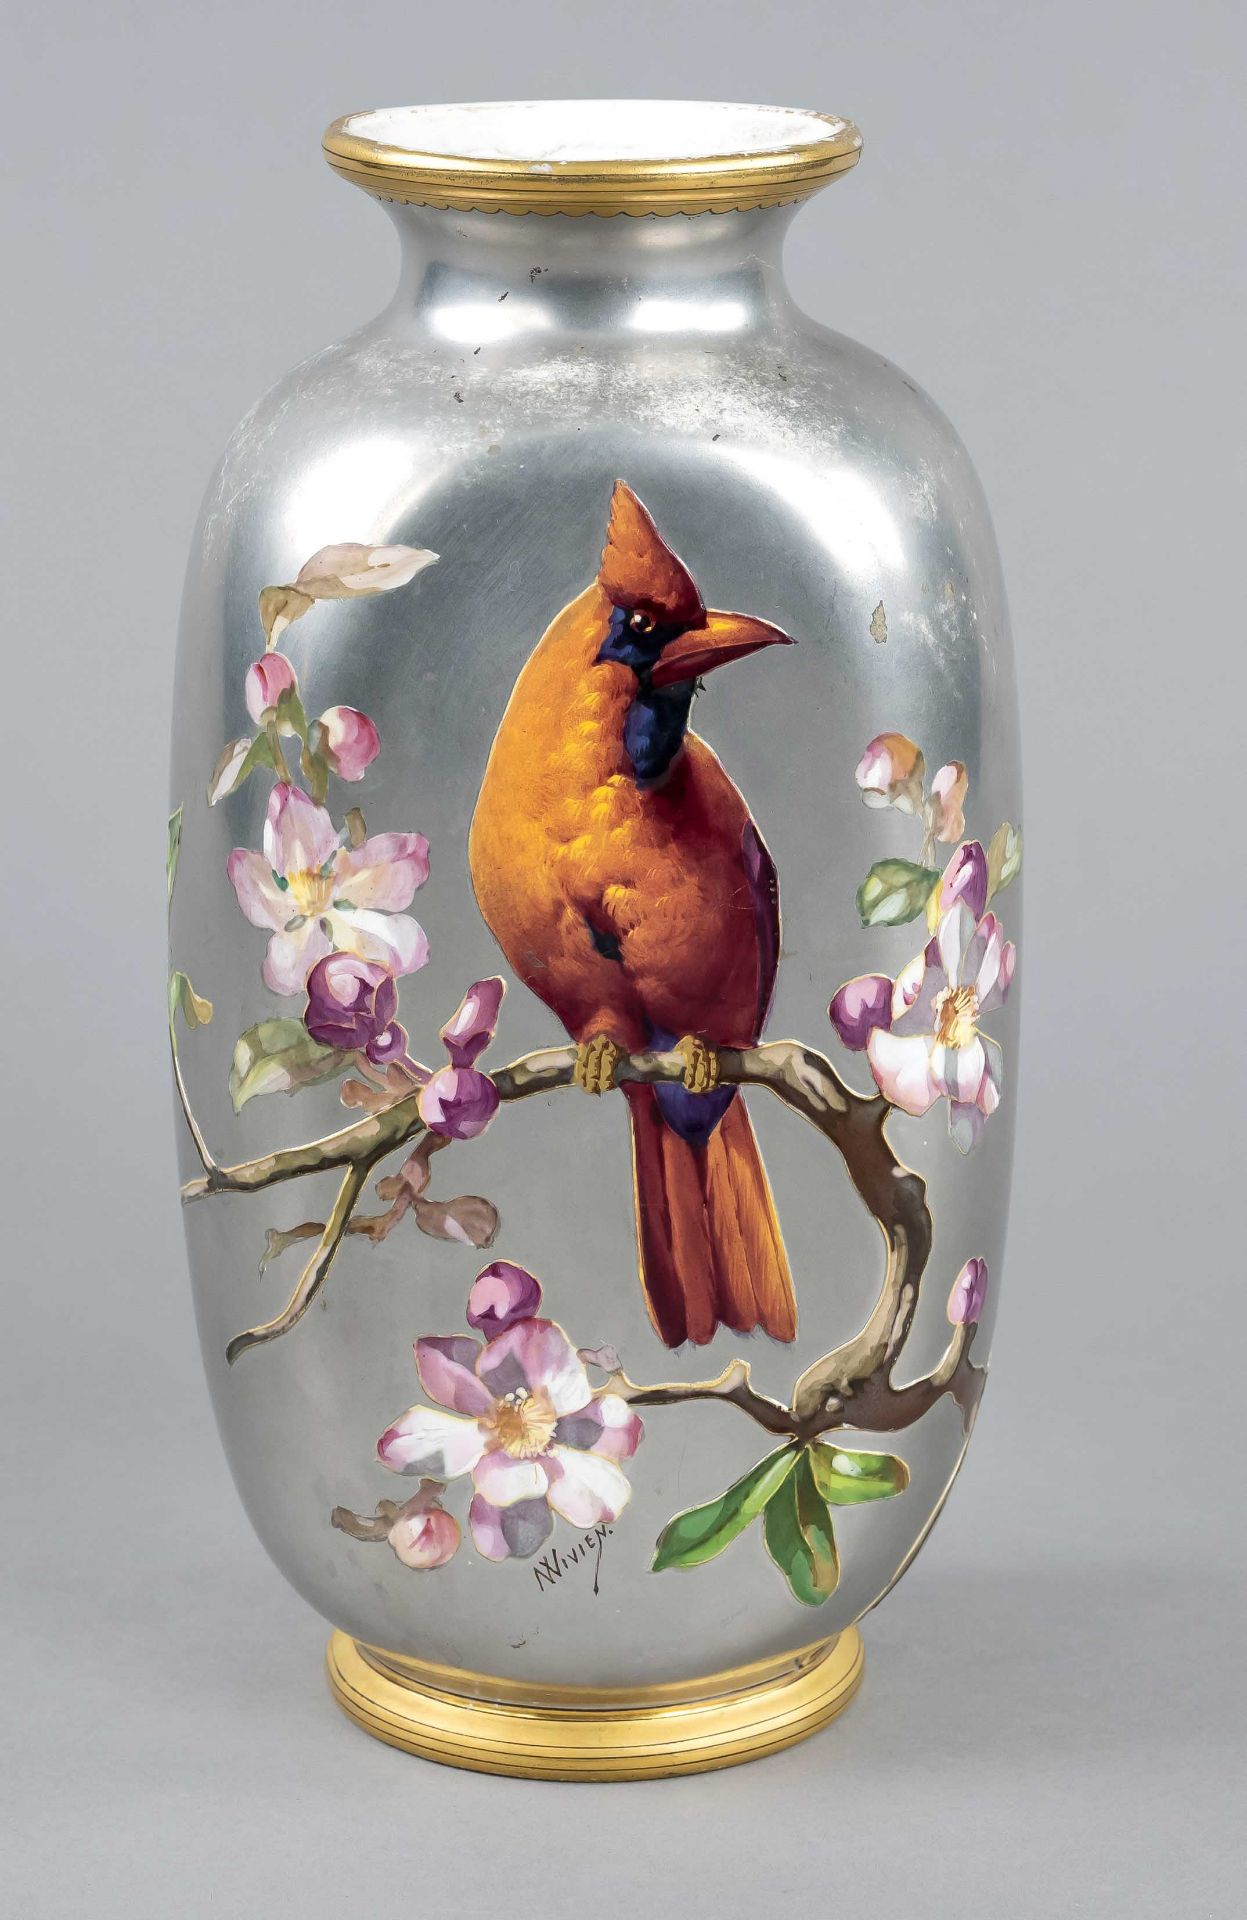 Vase, Paris, France, 19th c., signed, Narcisse Vivien, a cardinal bird on a flowering fruit